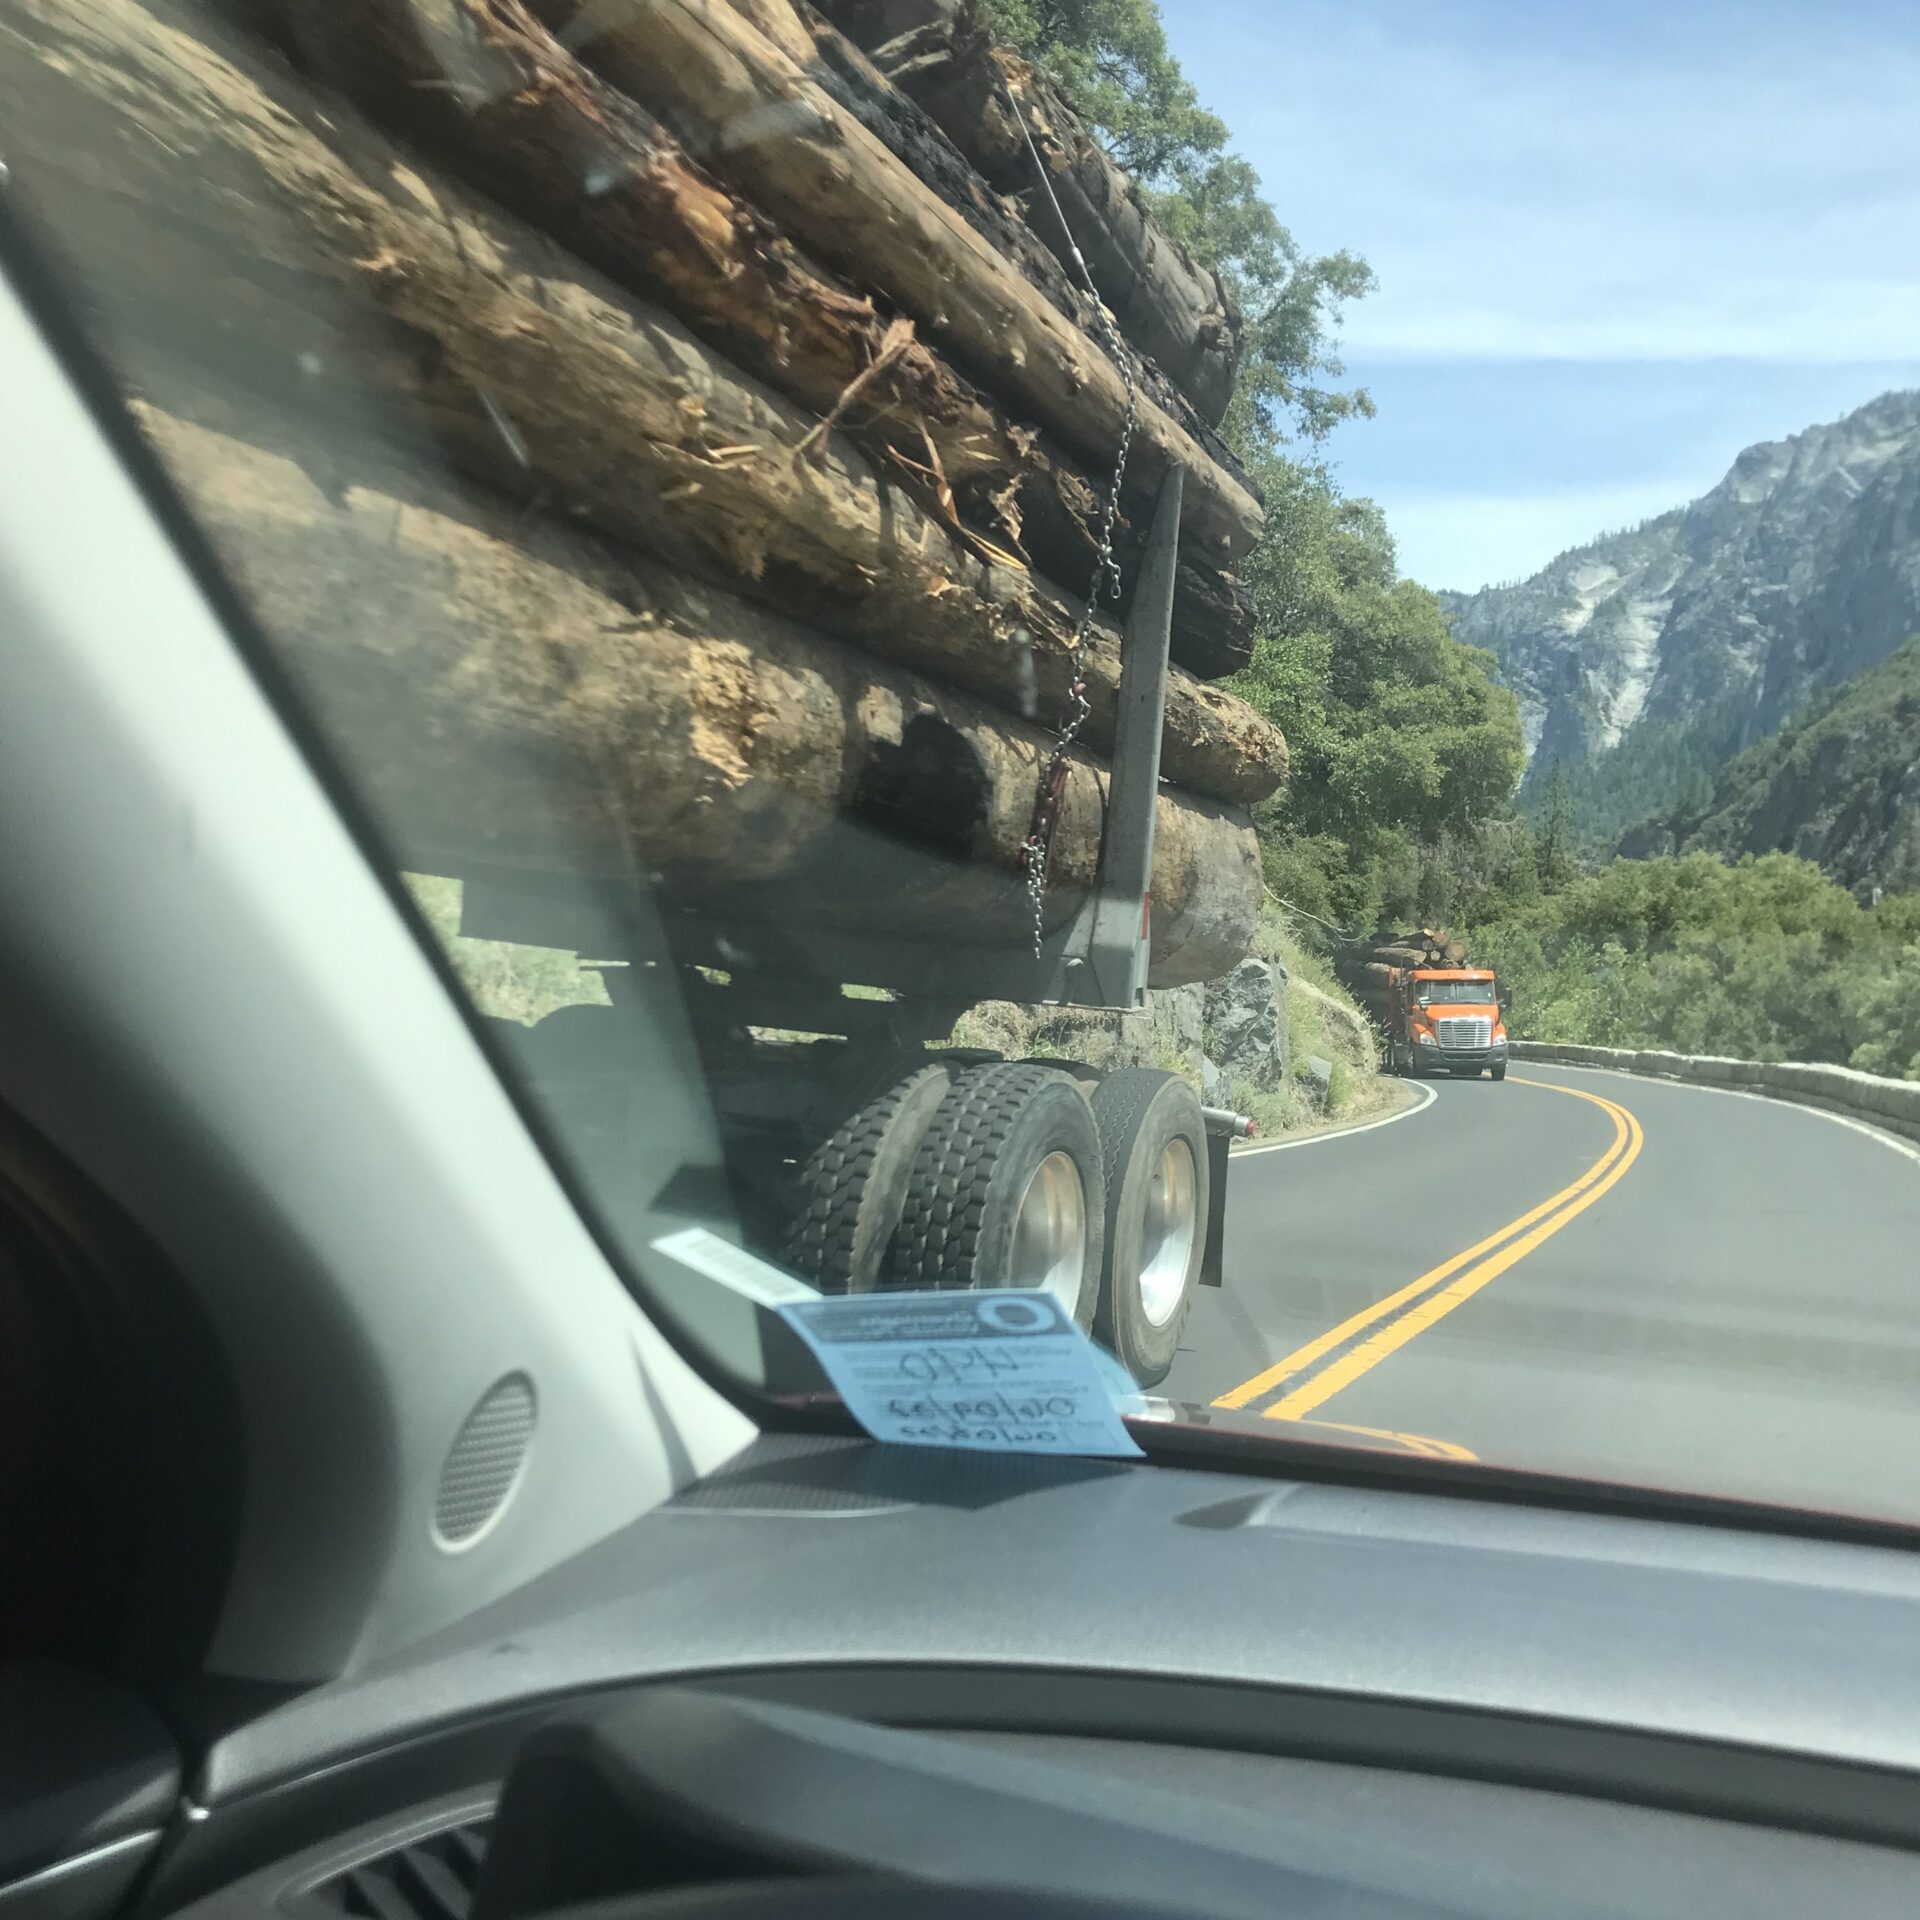 Log Trucks leaving Yosemite Valley, Doug Bevington © 2022 